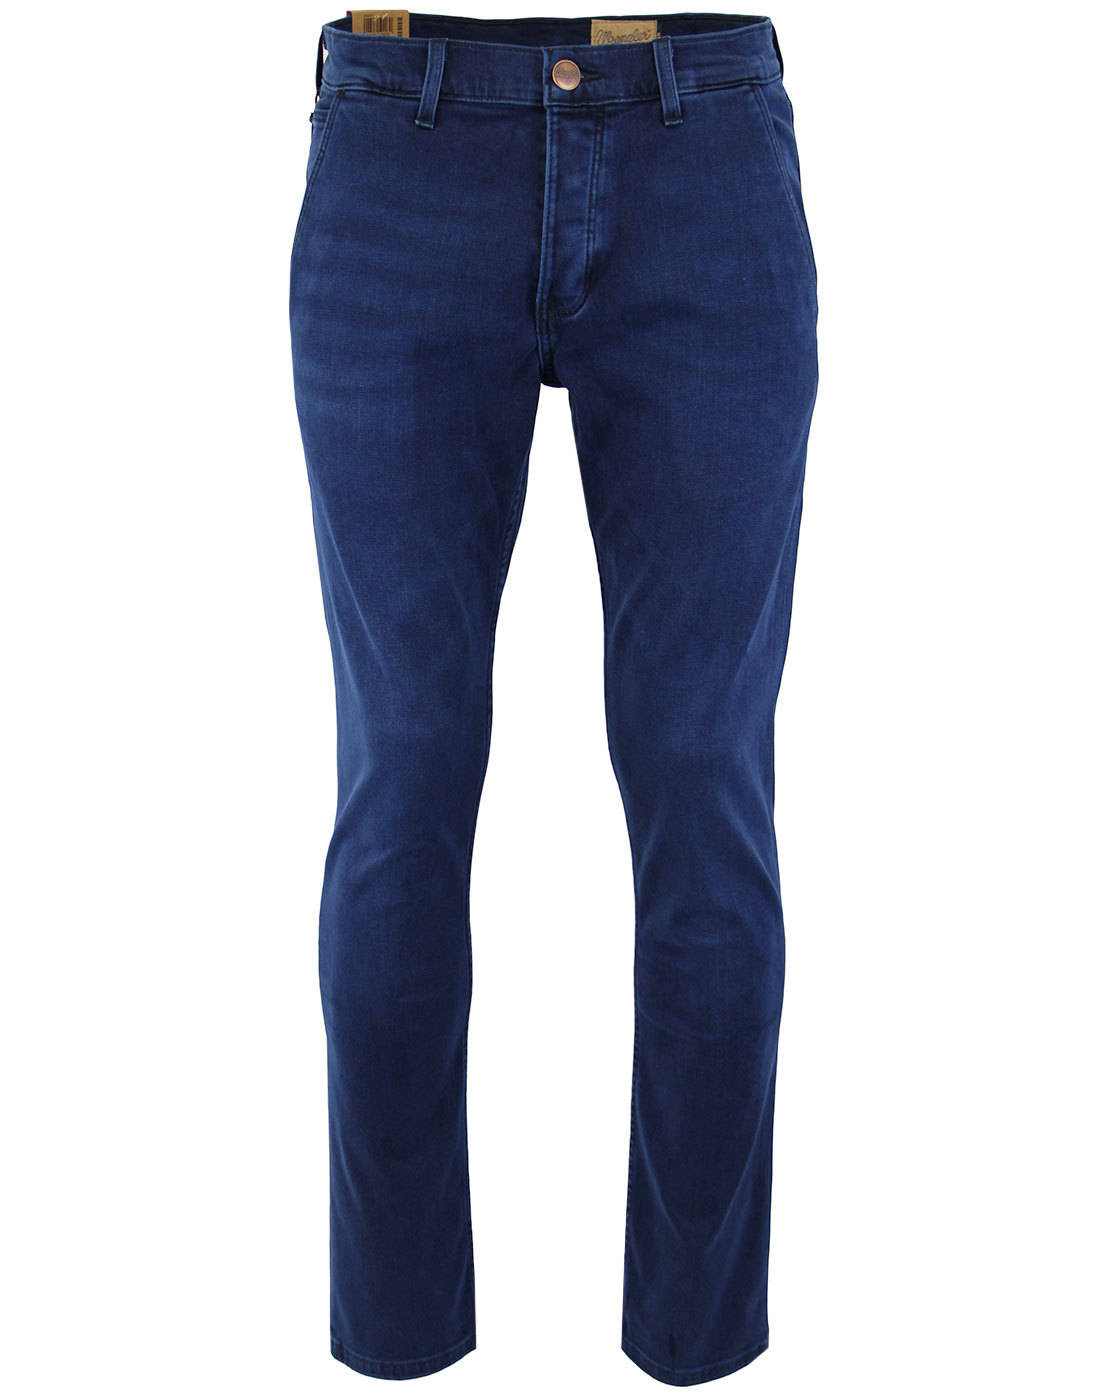 WRANGLER Spencer Retro Indie Soft Luxe Denim Jeans in Tidal Wave